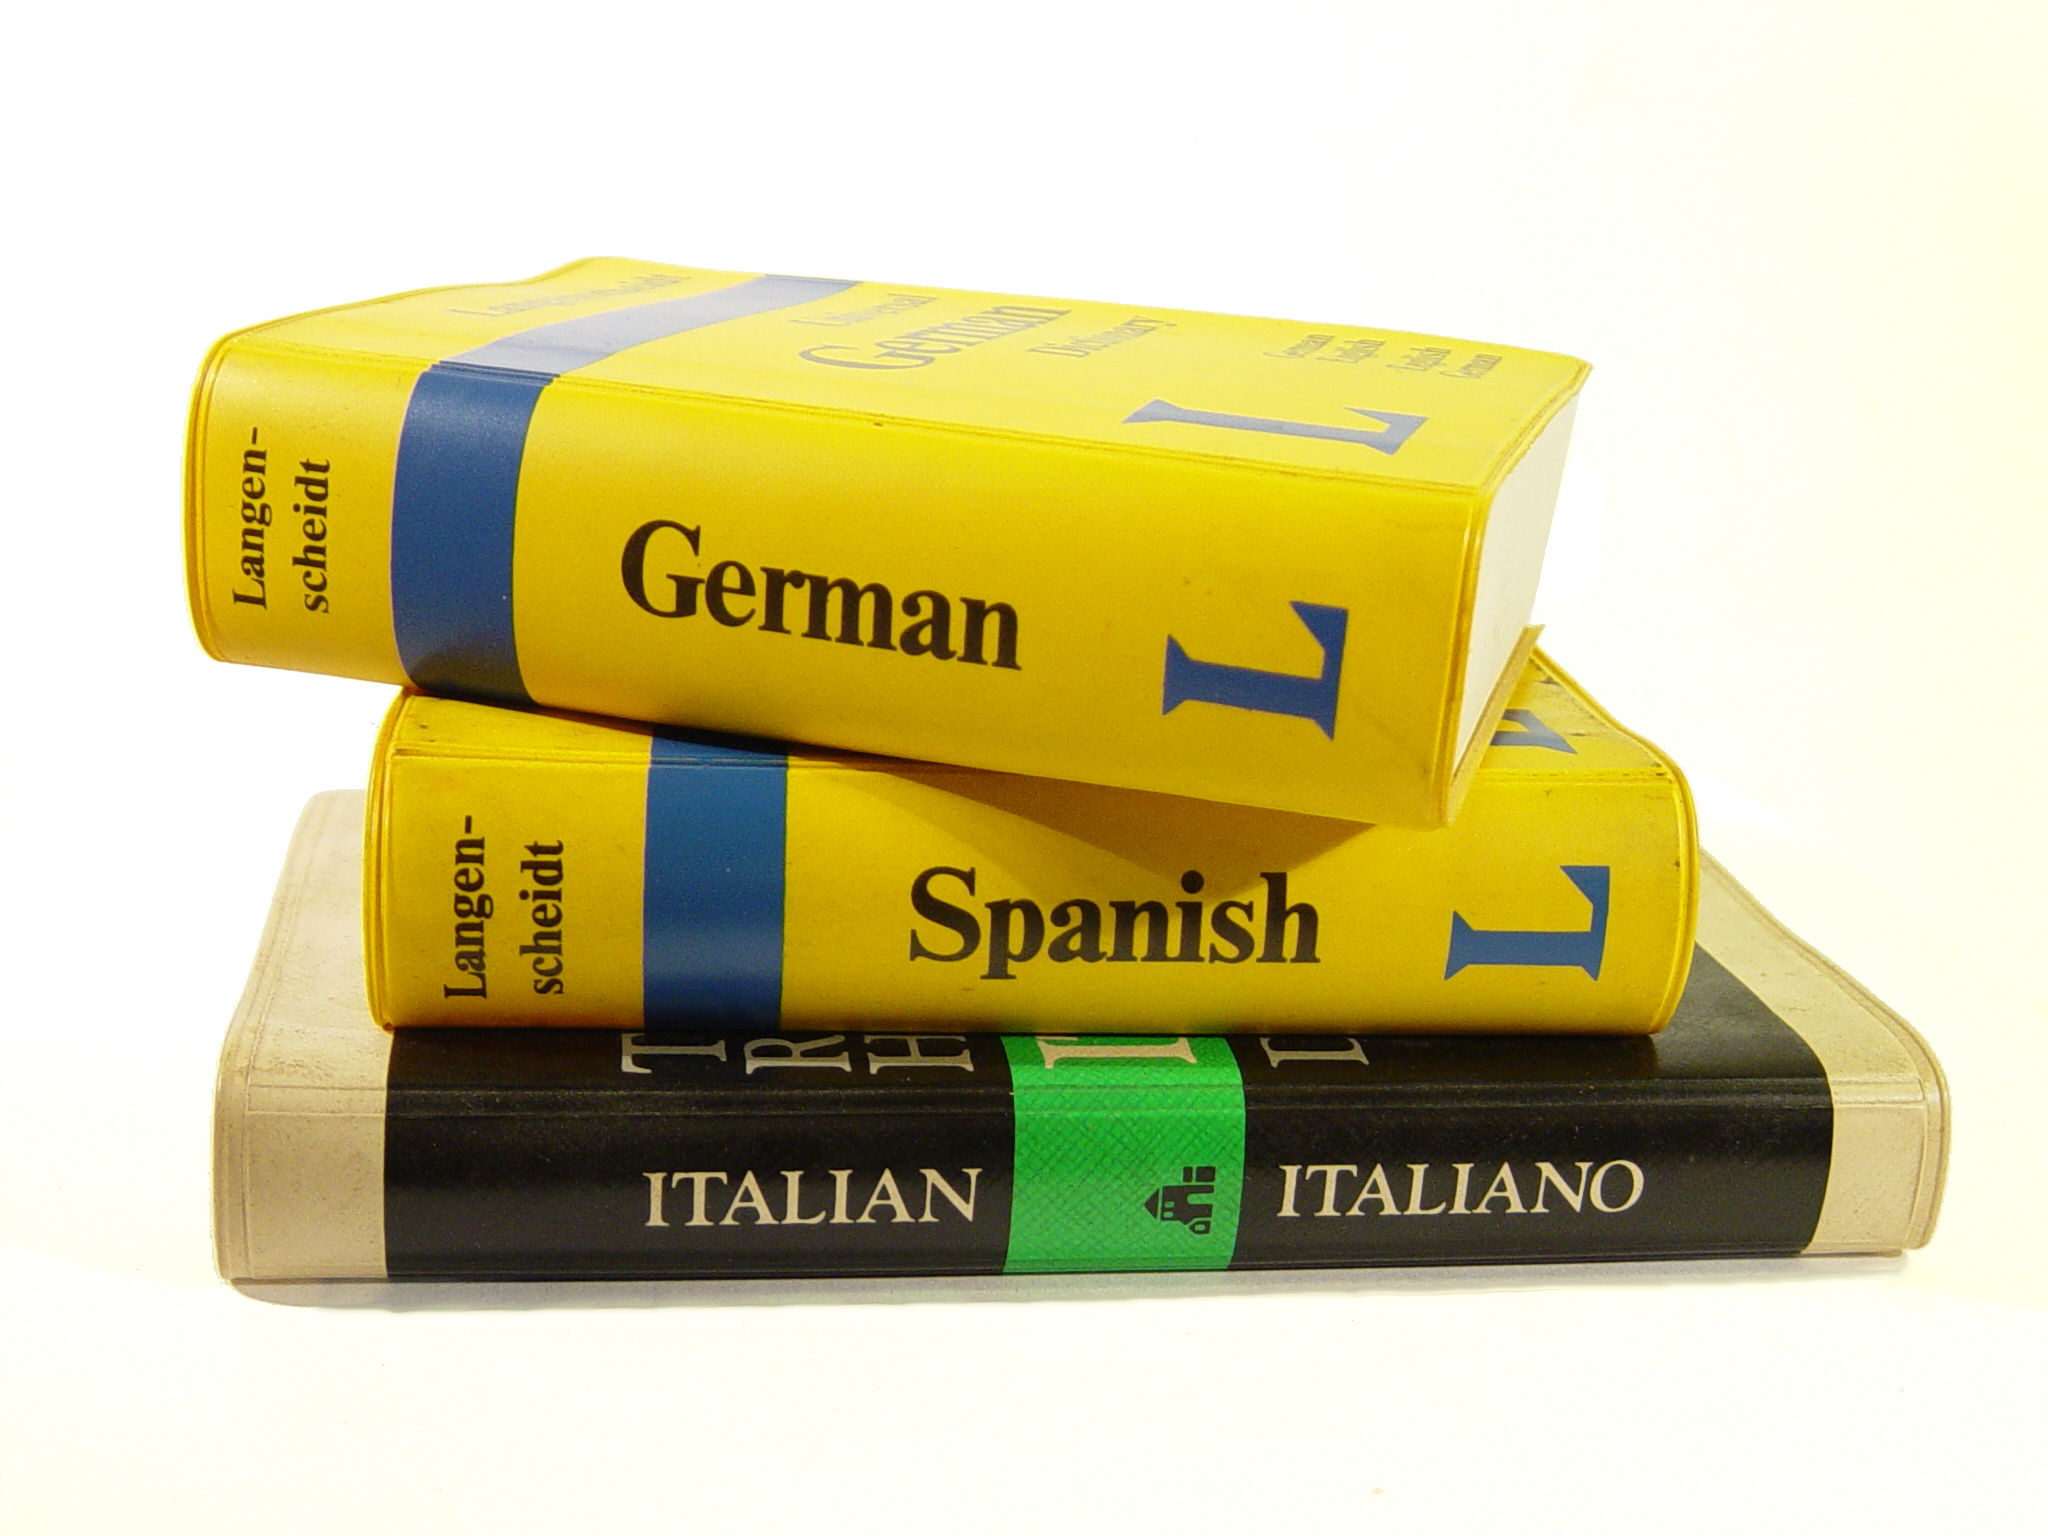 The language guidebooks